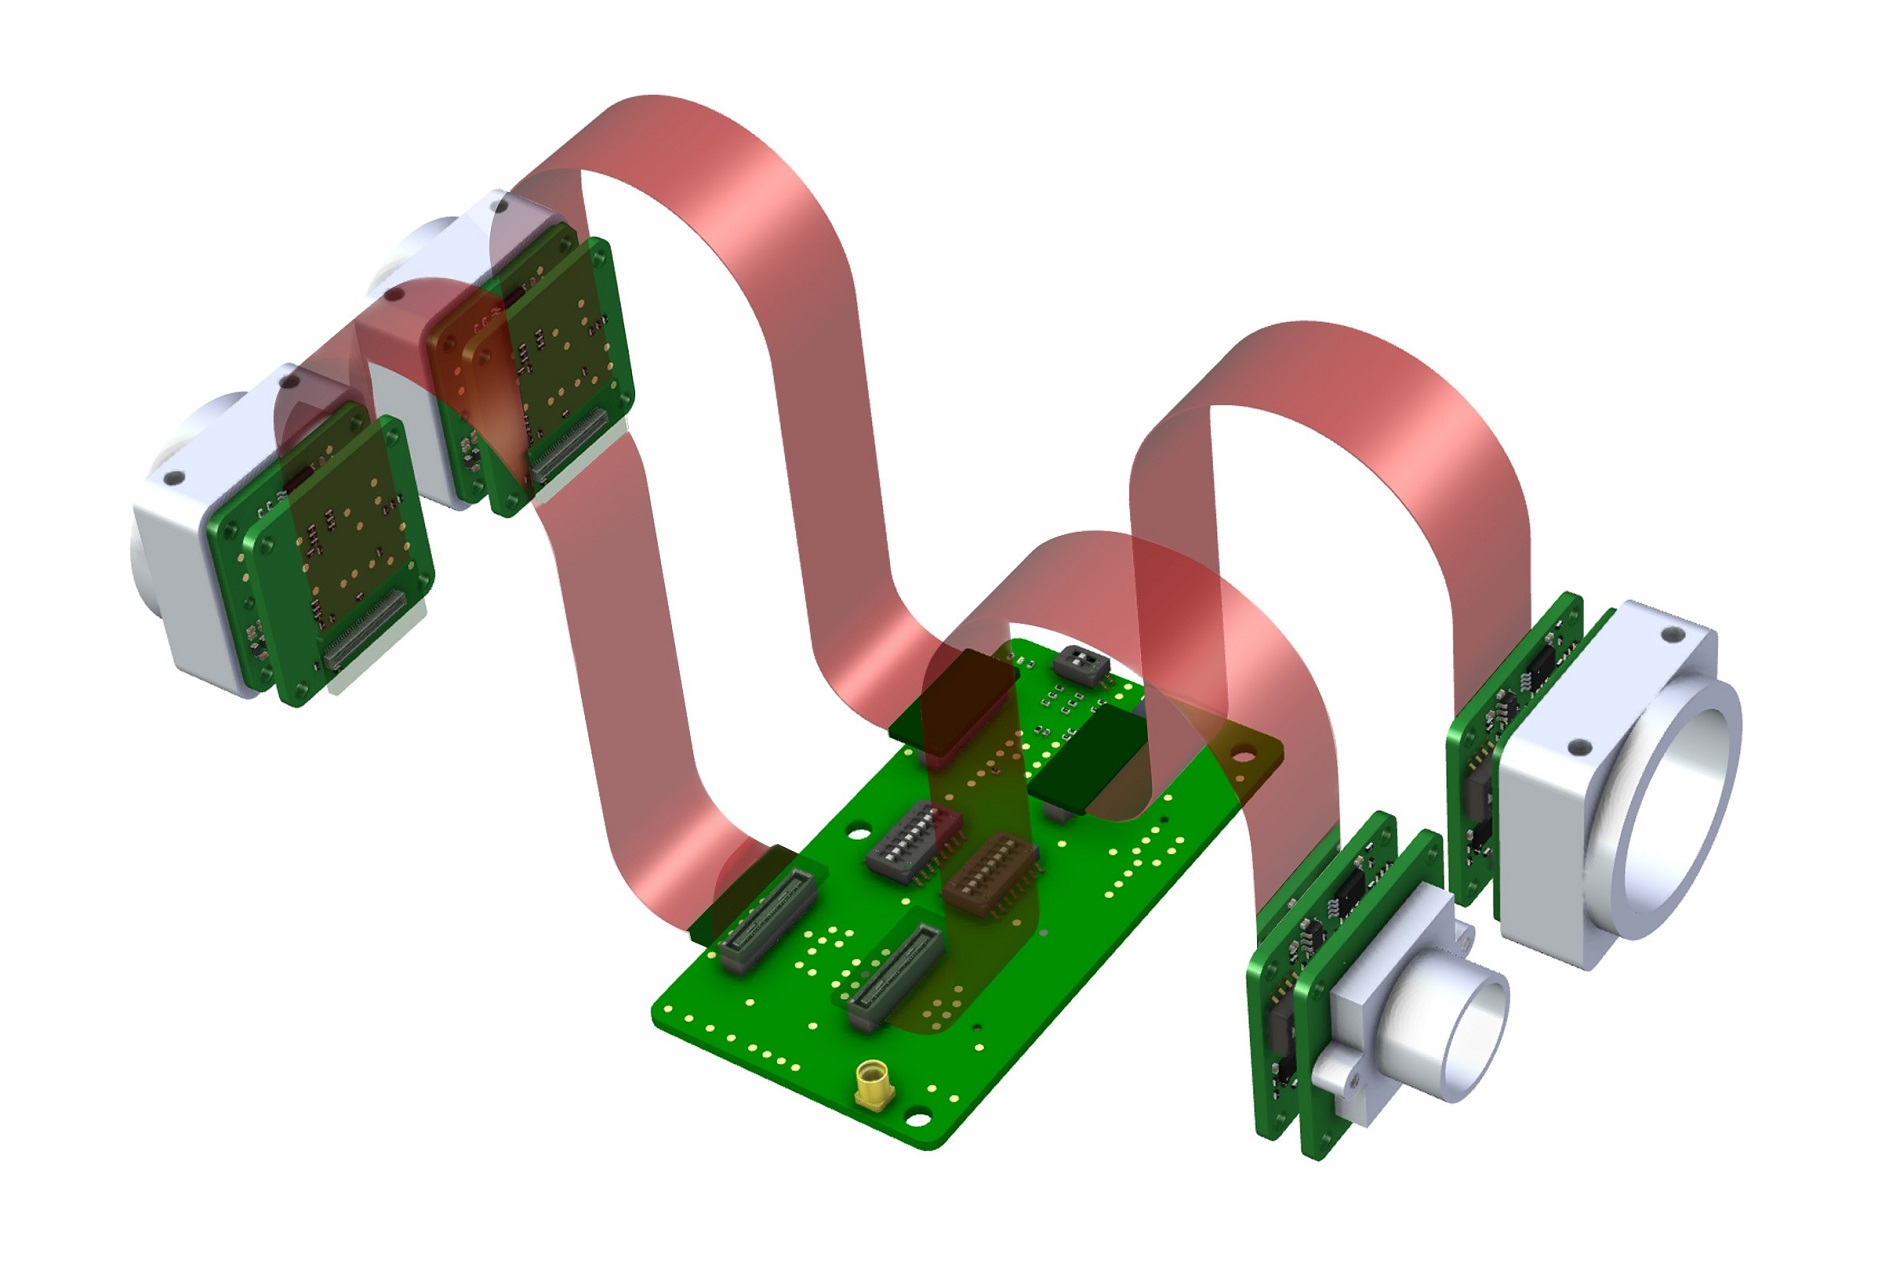 Connection of four FSM sensor modules to the new multi-sensor platform